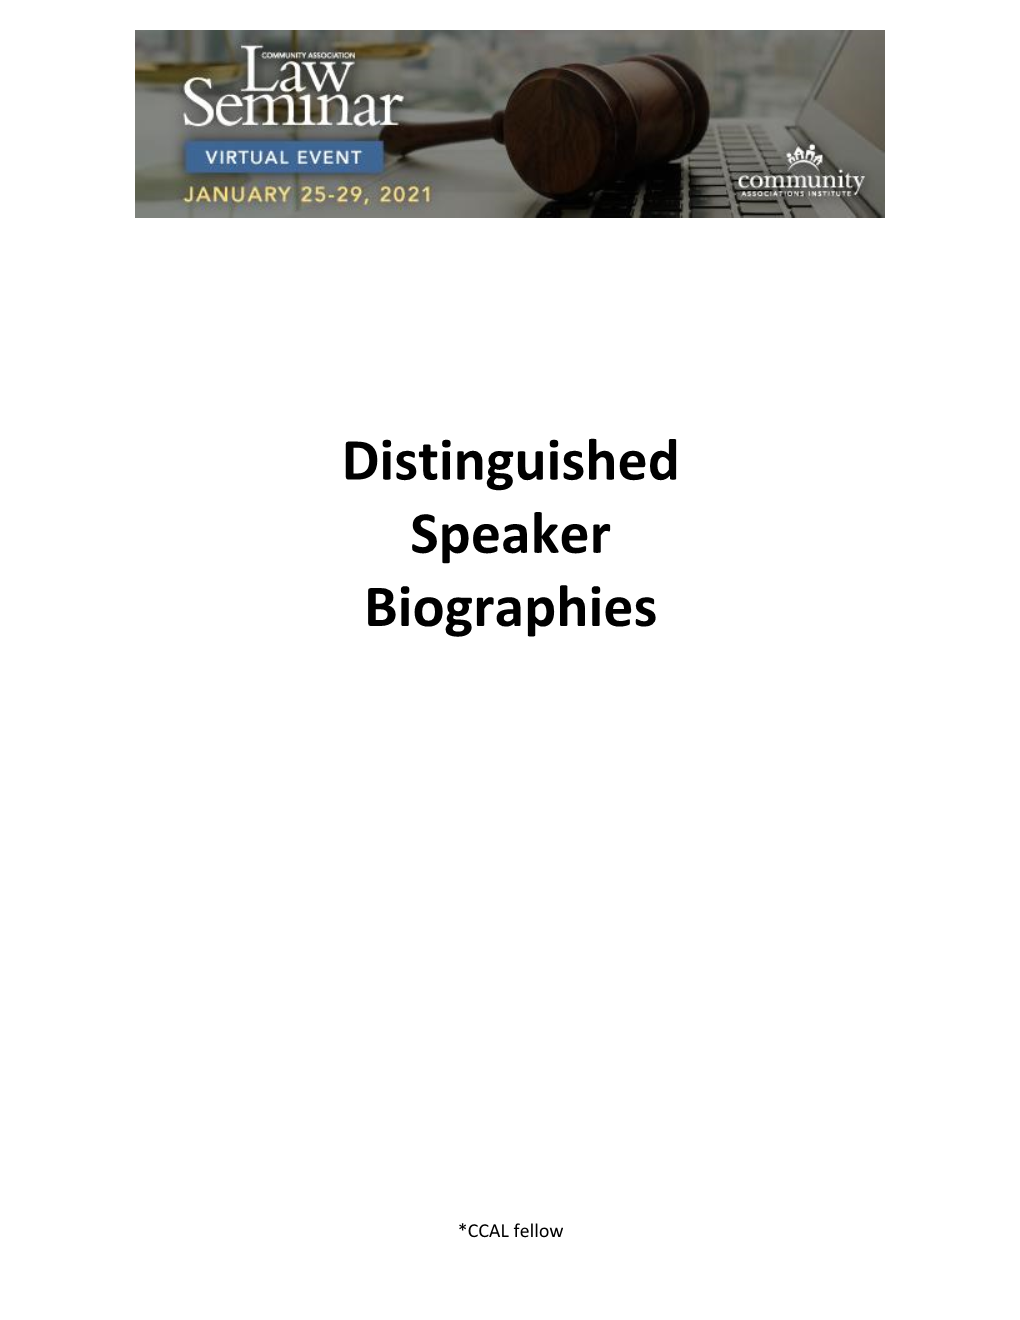 Distinguished Speaker Biographies